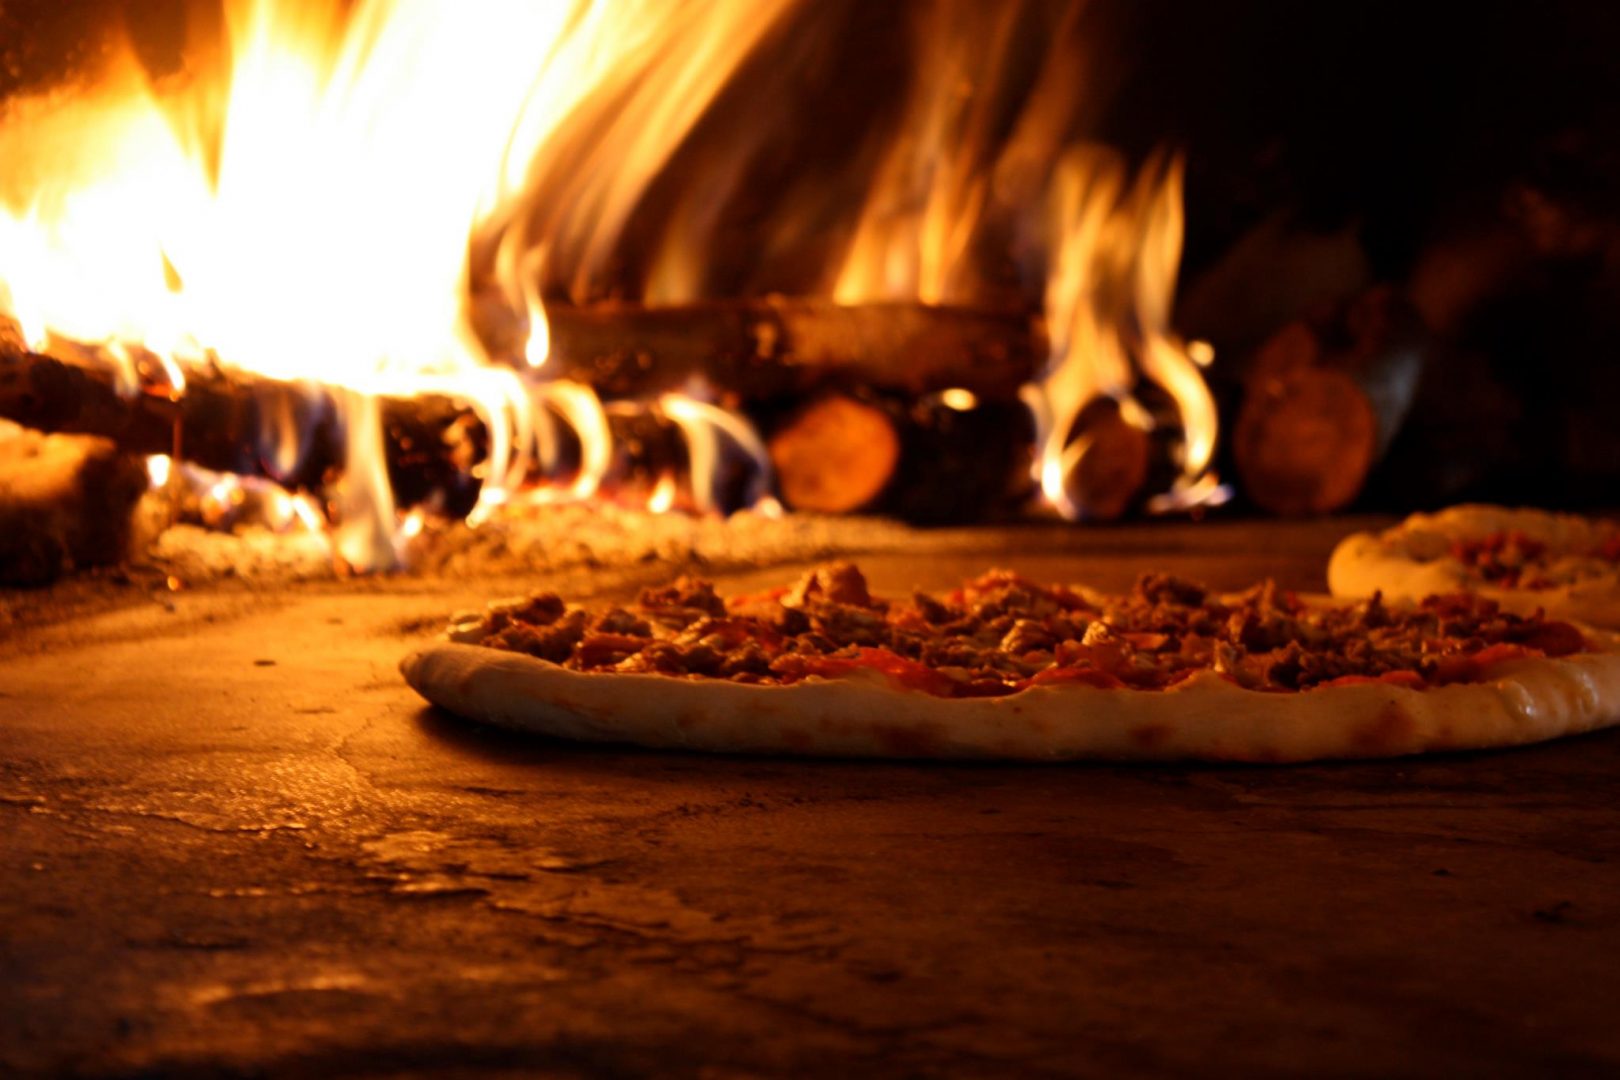 Forno Venetzia Pronto Outdoor Wood Burning Pizza Oven